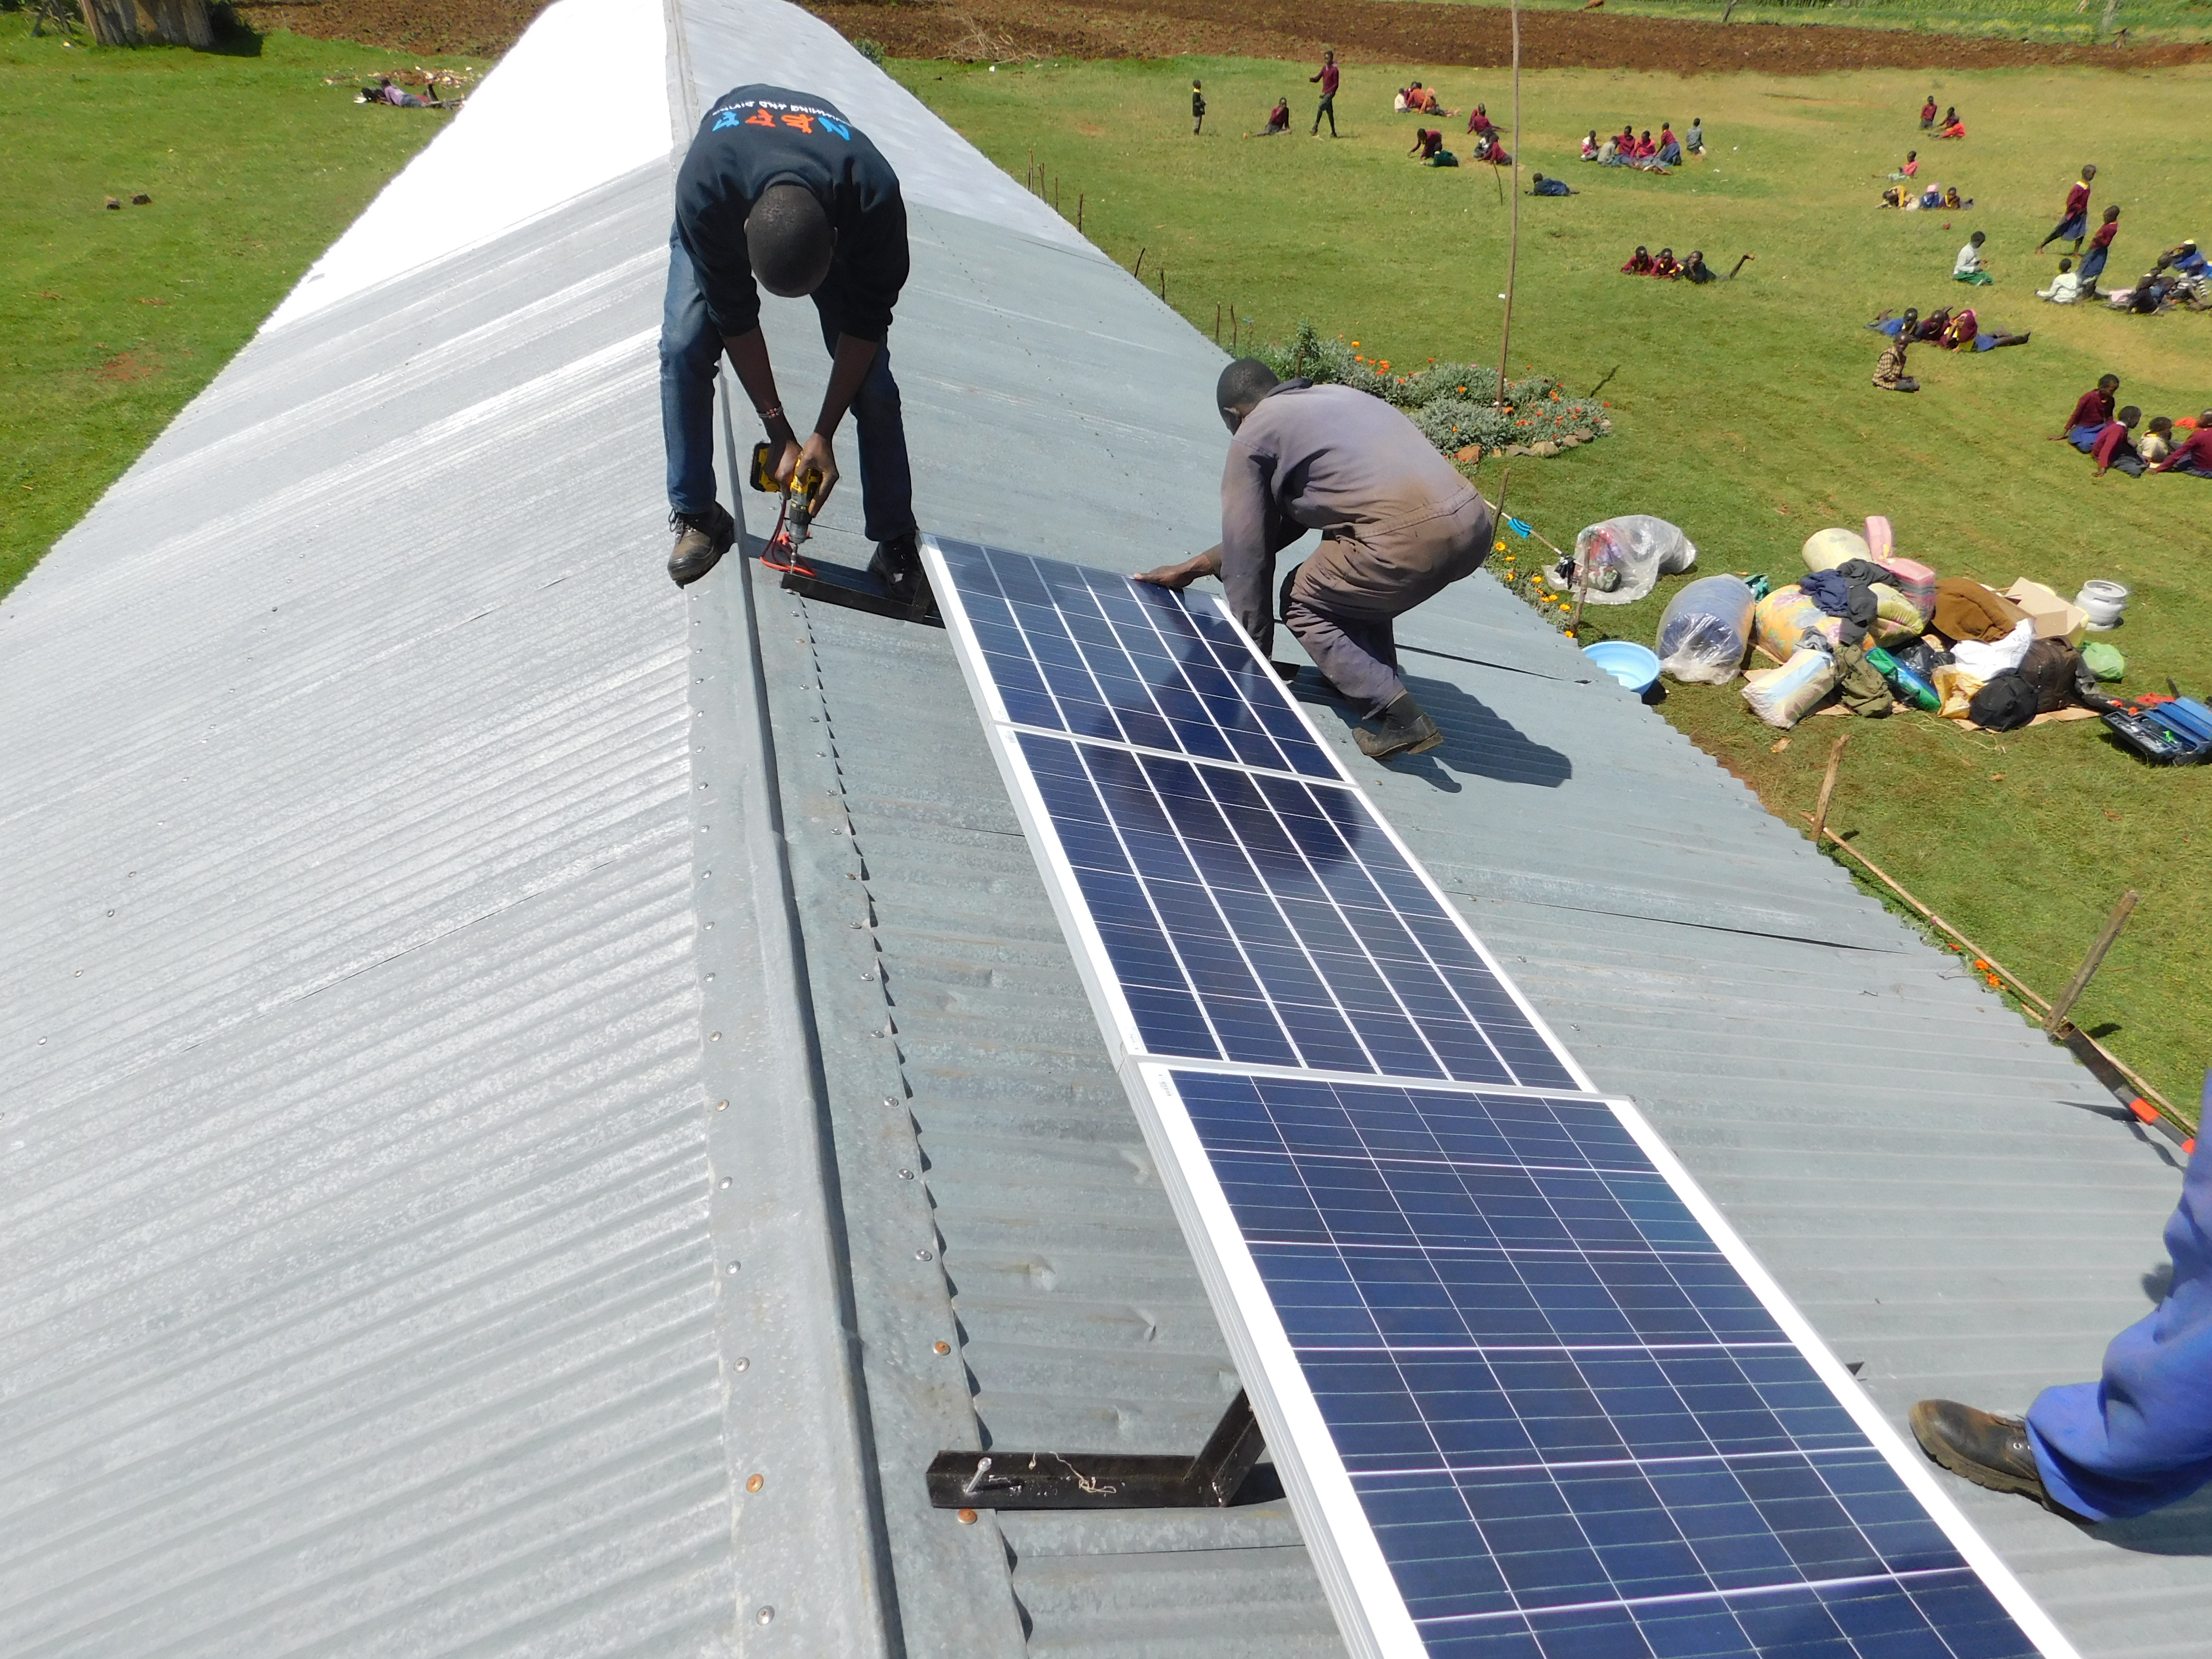 pannelli solari scuole tetto kenya mani tese 2018